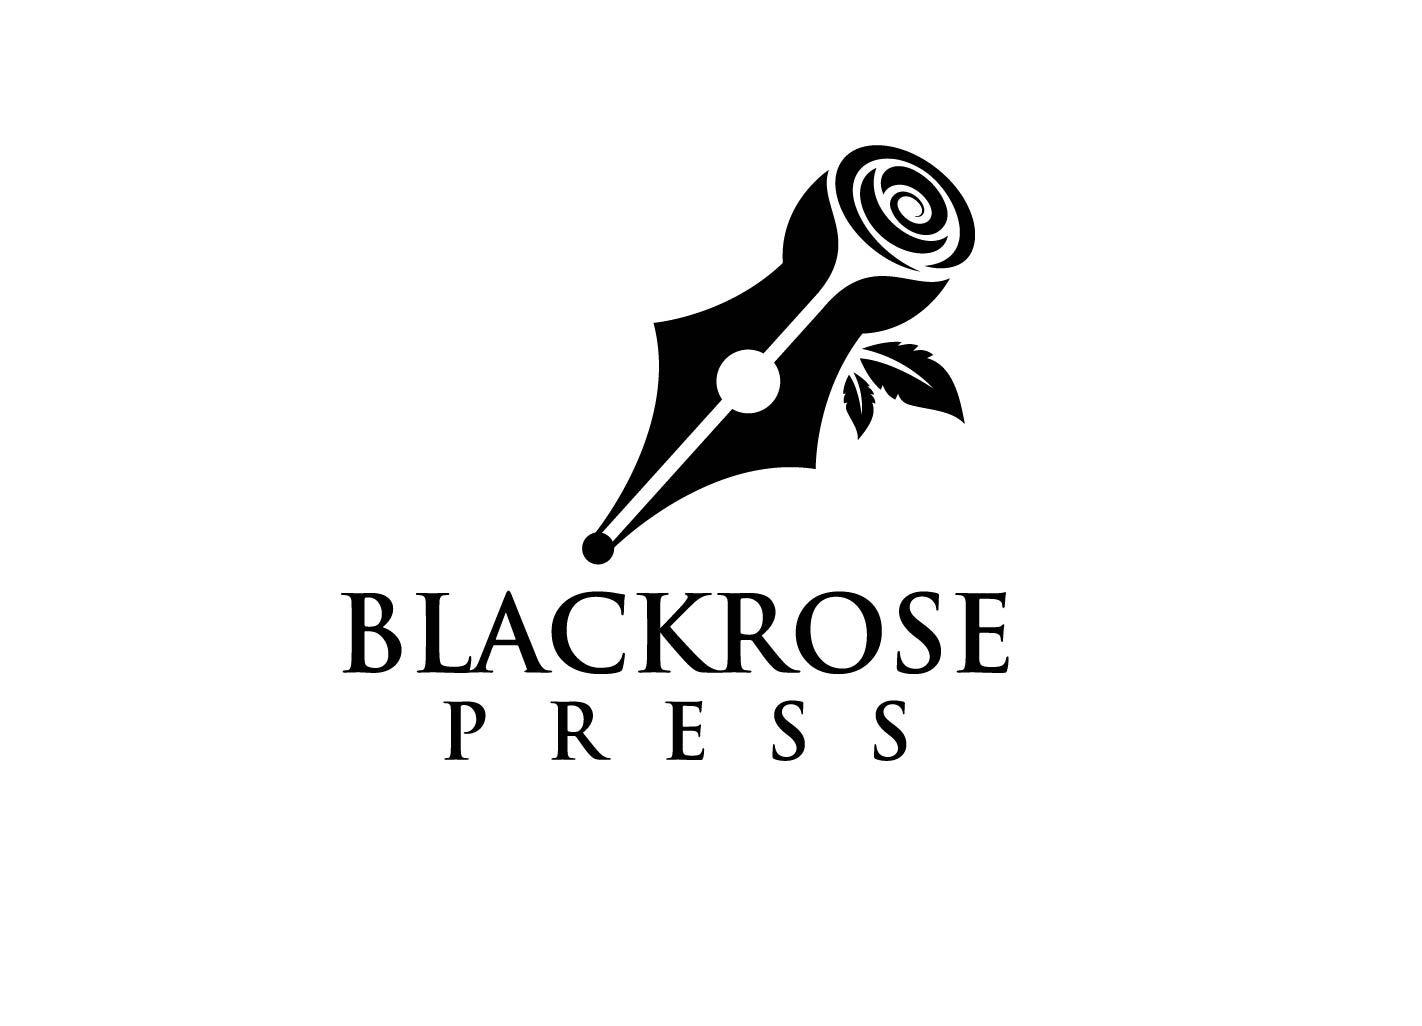 Press Logo - Bold, Serious, It Company Logo Design for Blackrose Press